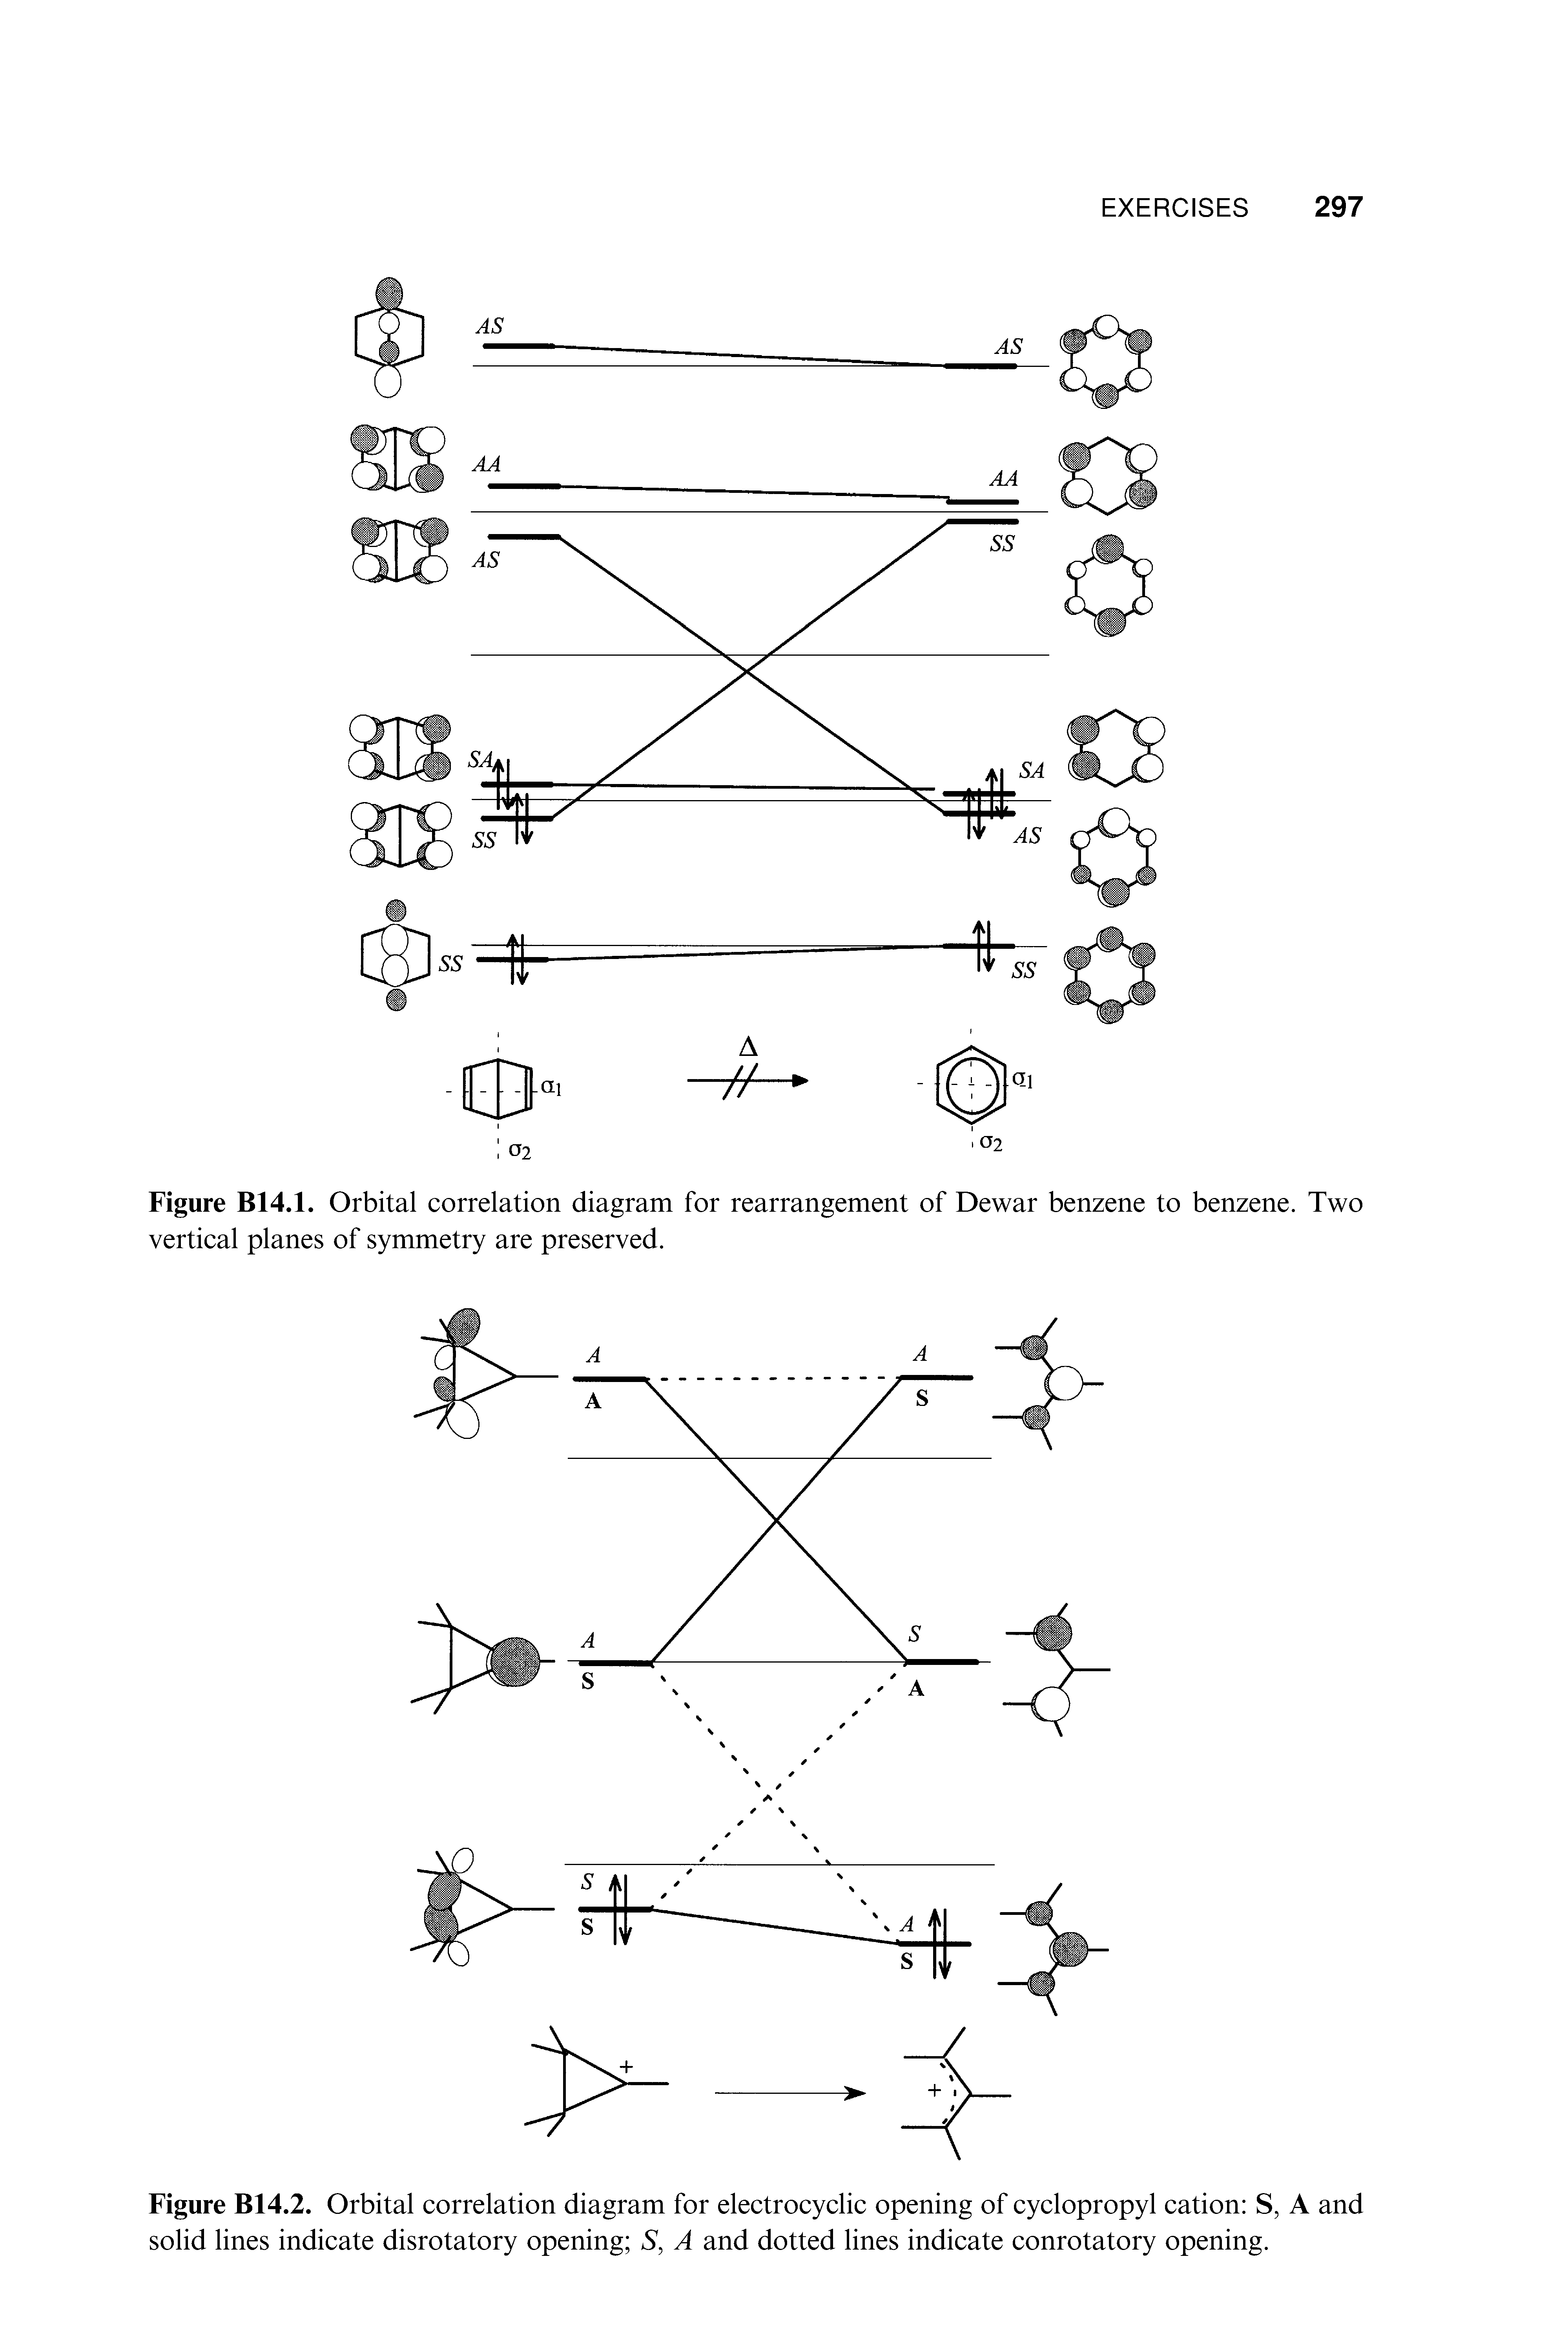 Figure B14.1. Orbital correlation diagram for rearrangement of Dewar benzene to benzene. Two vertical planes of symmetry are preserved.